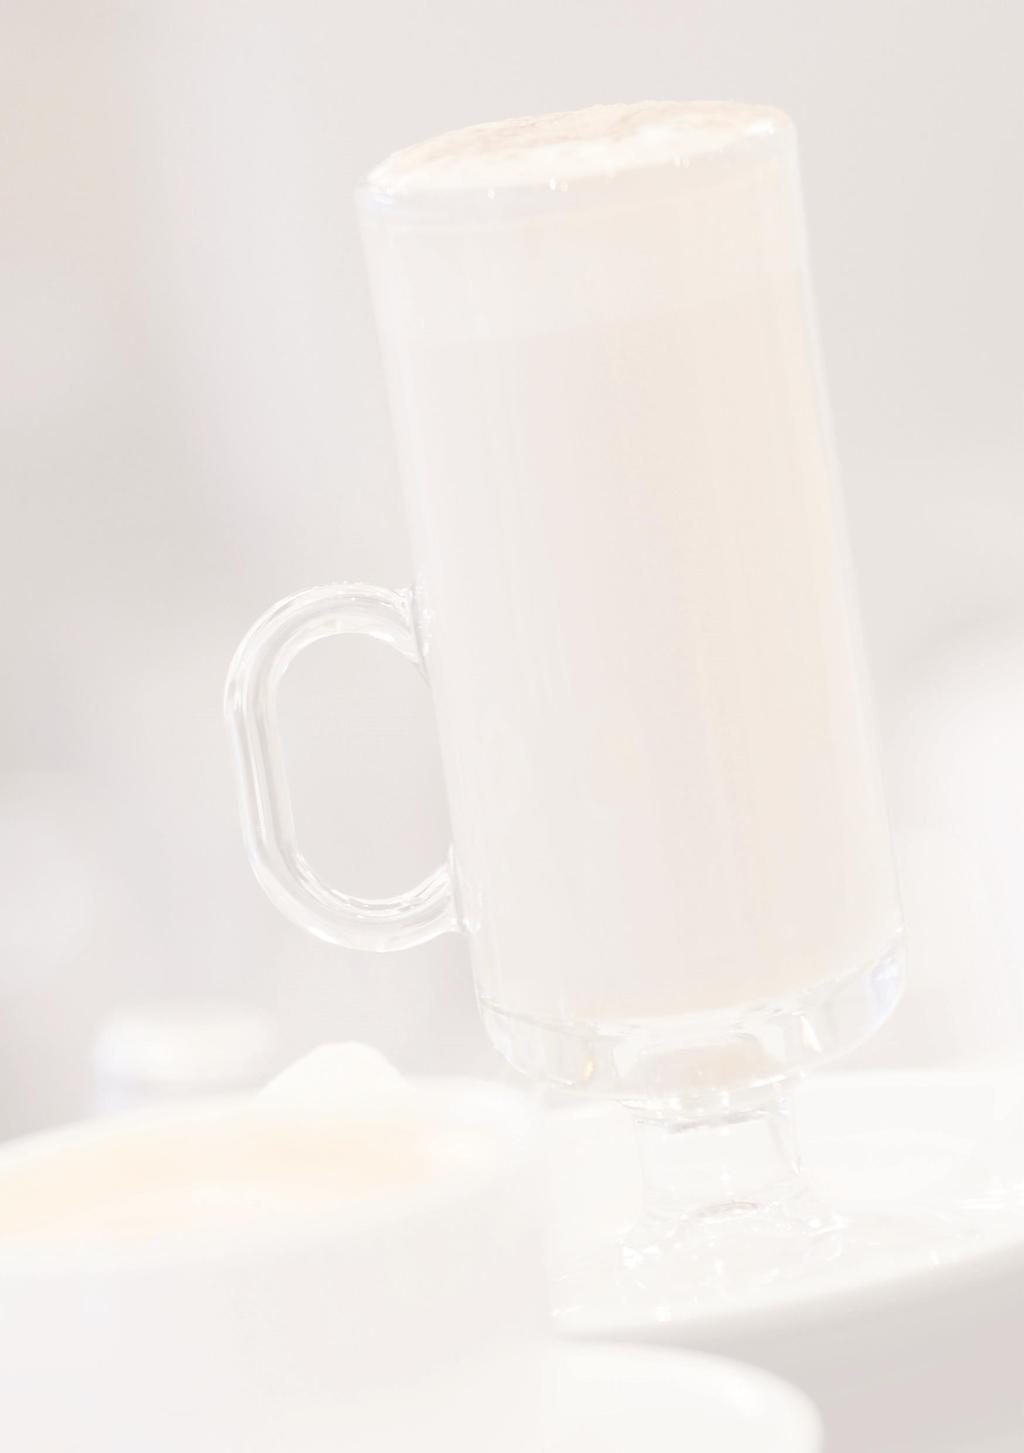 Hot Drinks Affogato - Espresso Coffee served with Vanilla Ice Cream and your choice of liqueur: Frangelico, Tia Maria, Kahlua or Baileys $15 Hot Chocolate - With Marshmallows Mug $5 Tea - English